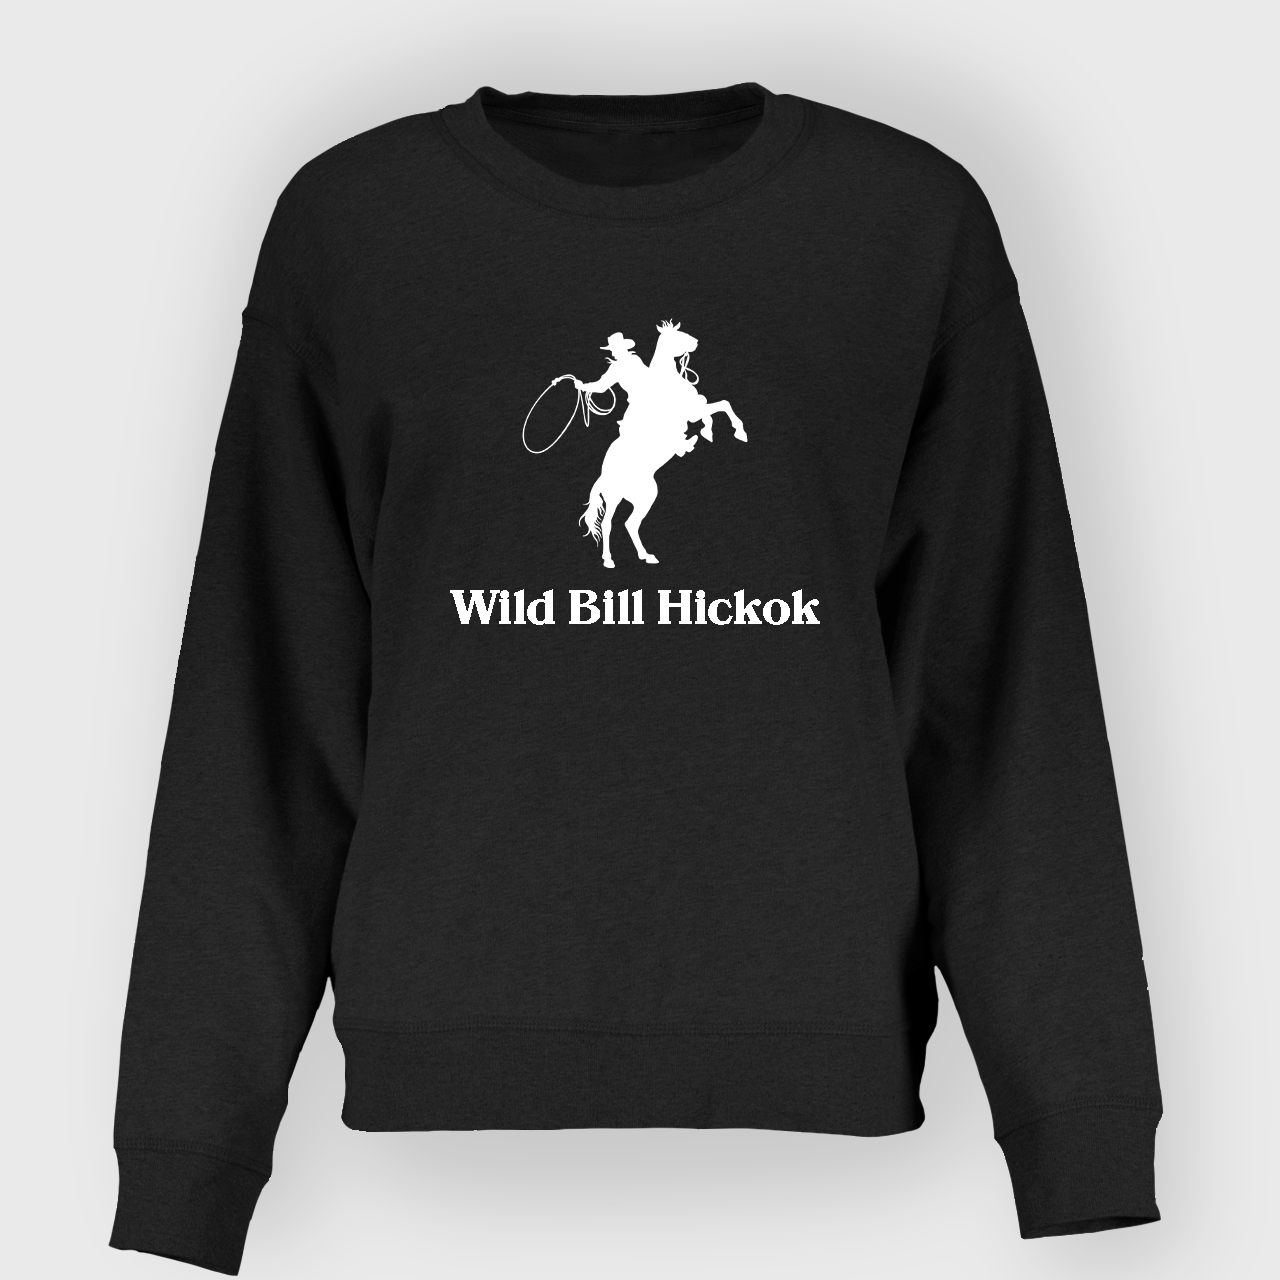 Wild Bill Hickok Riding a Horse Sweatshirt